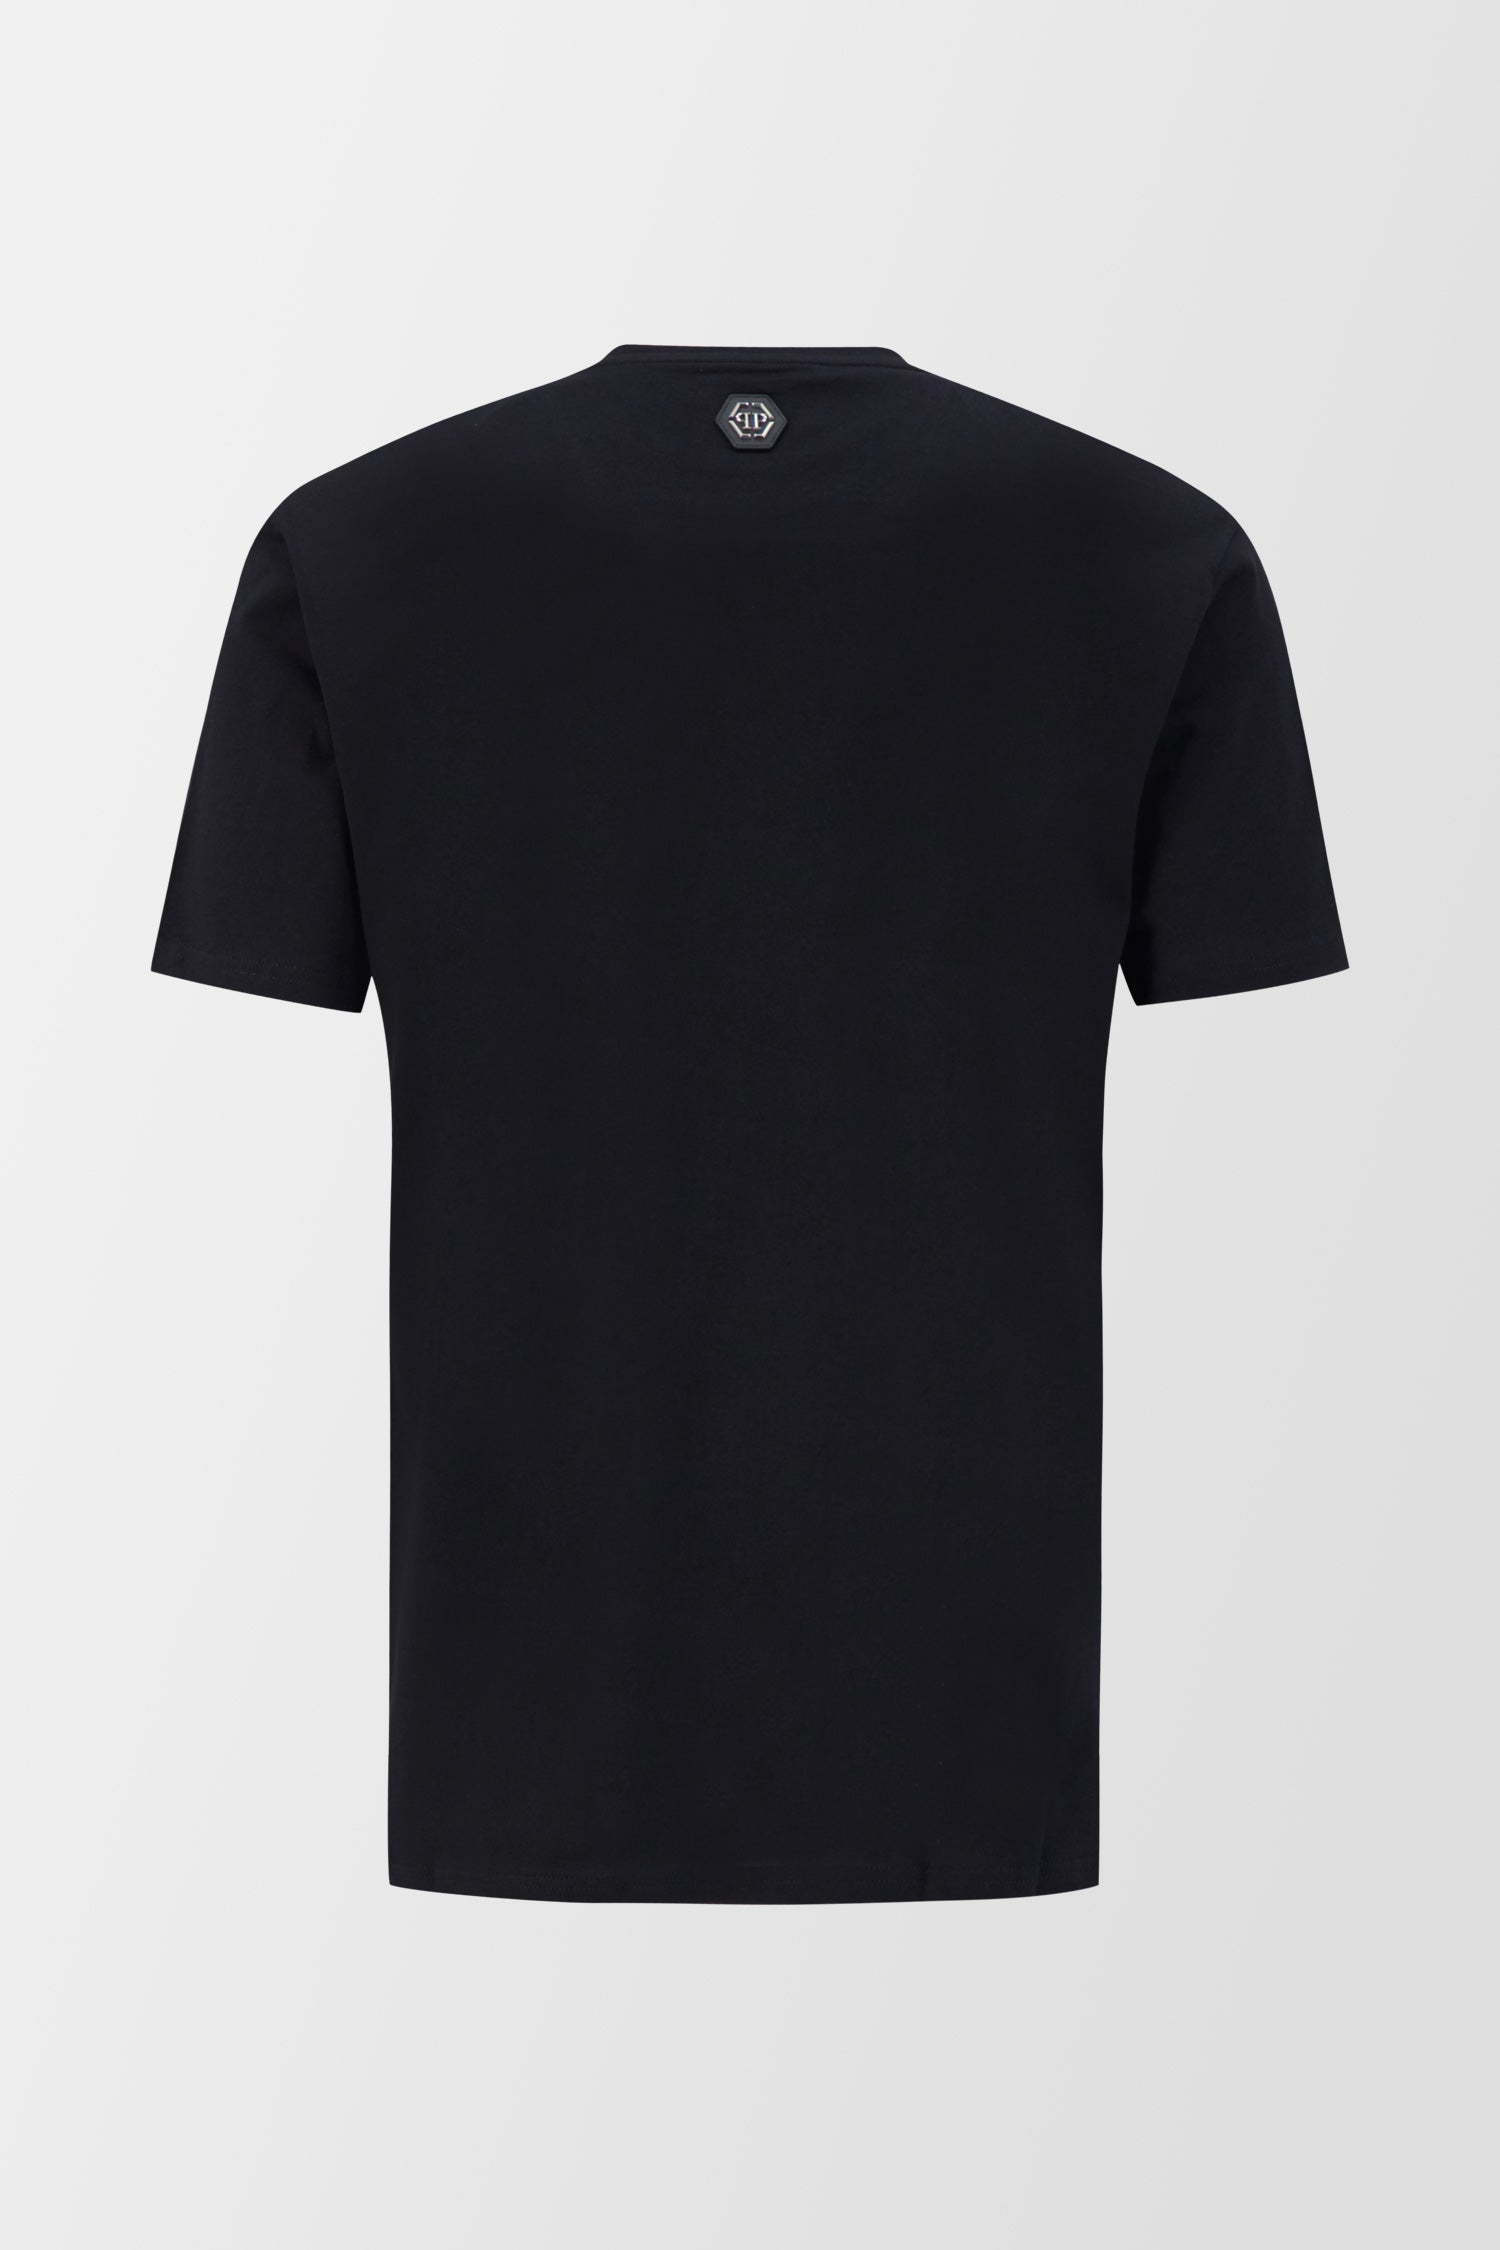 Philipp Plein Black Shark T-Shirt